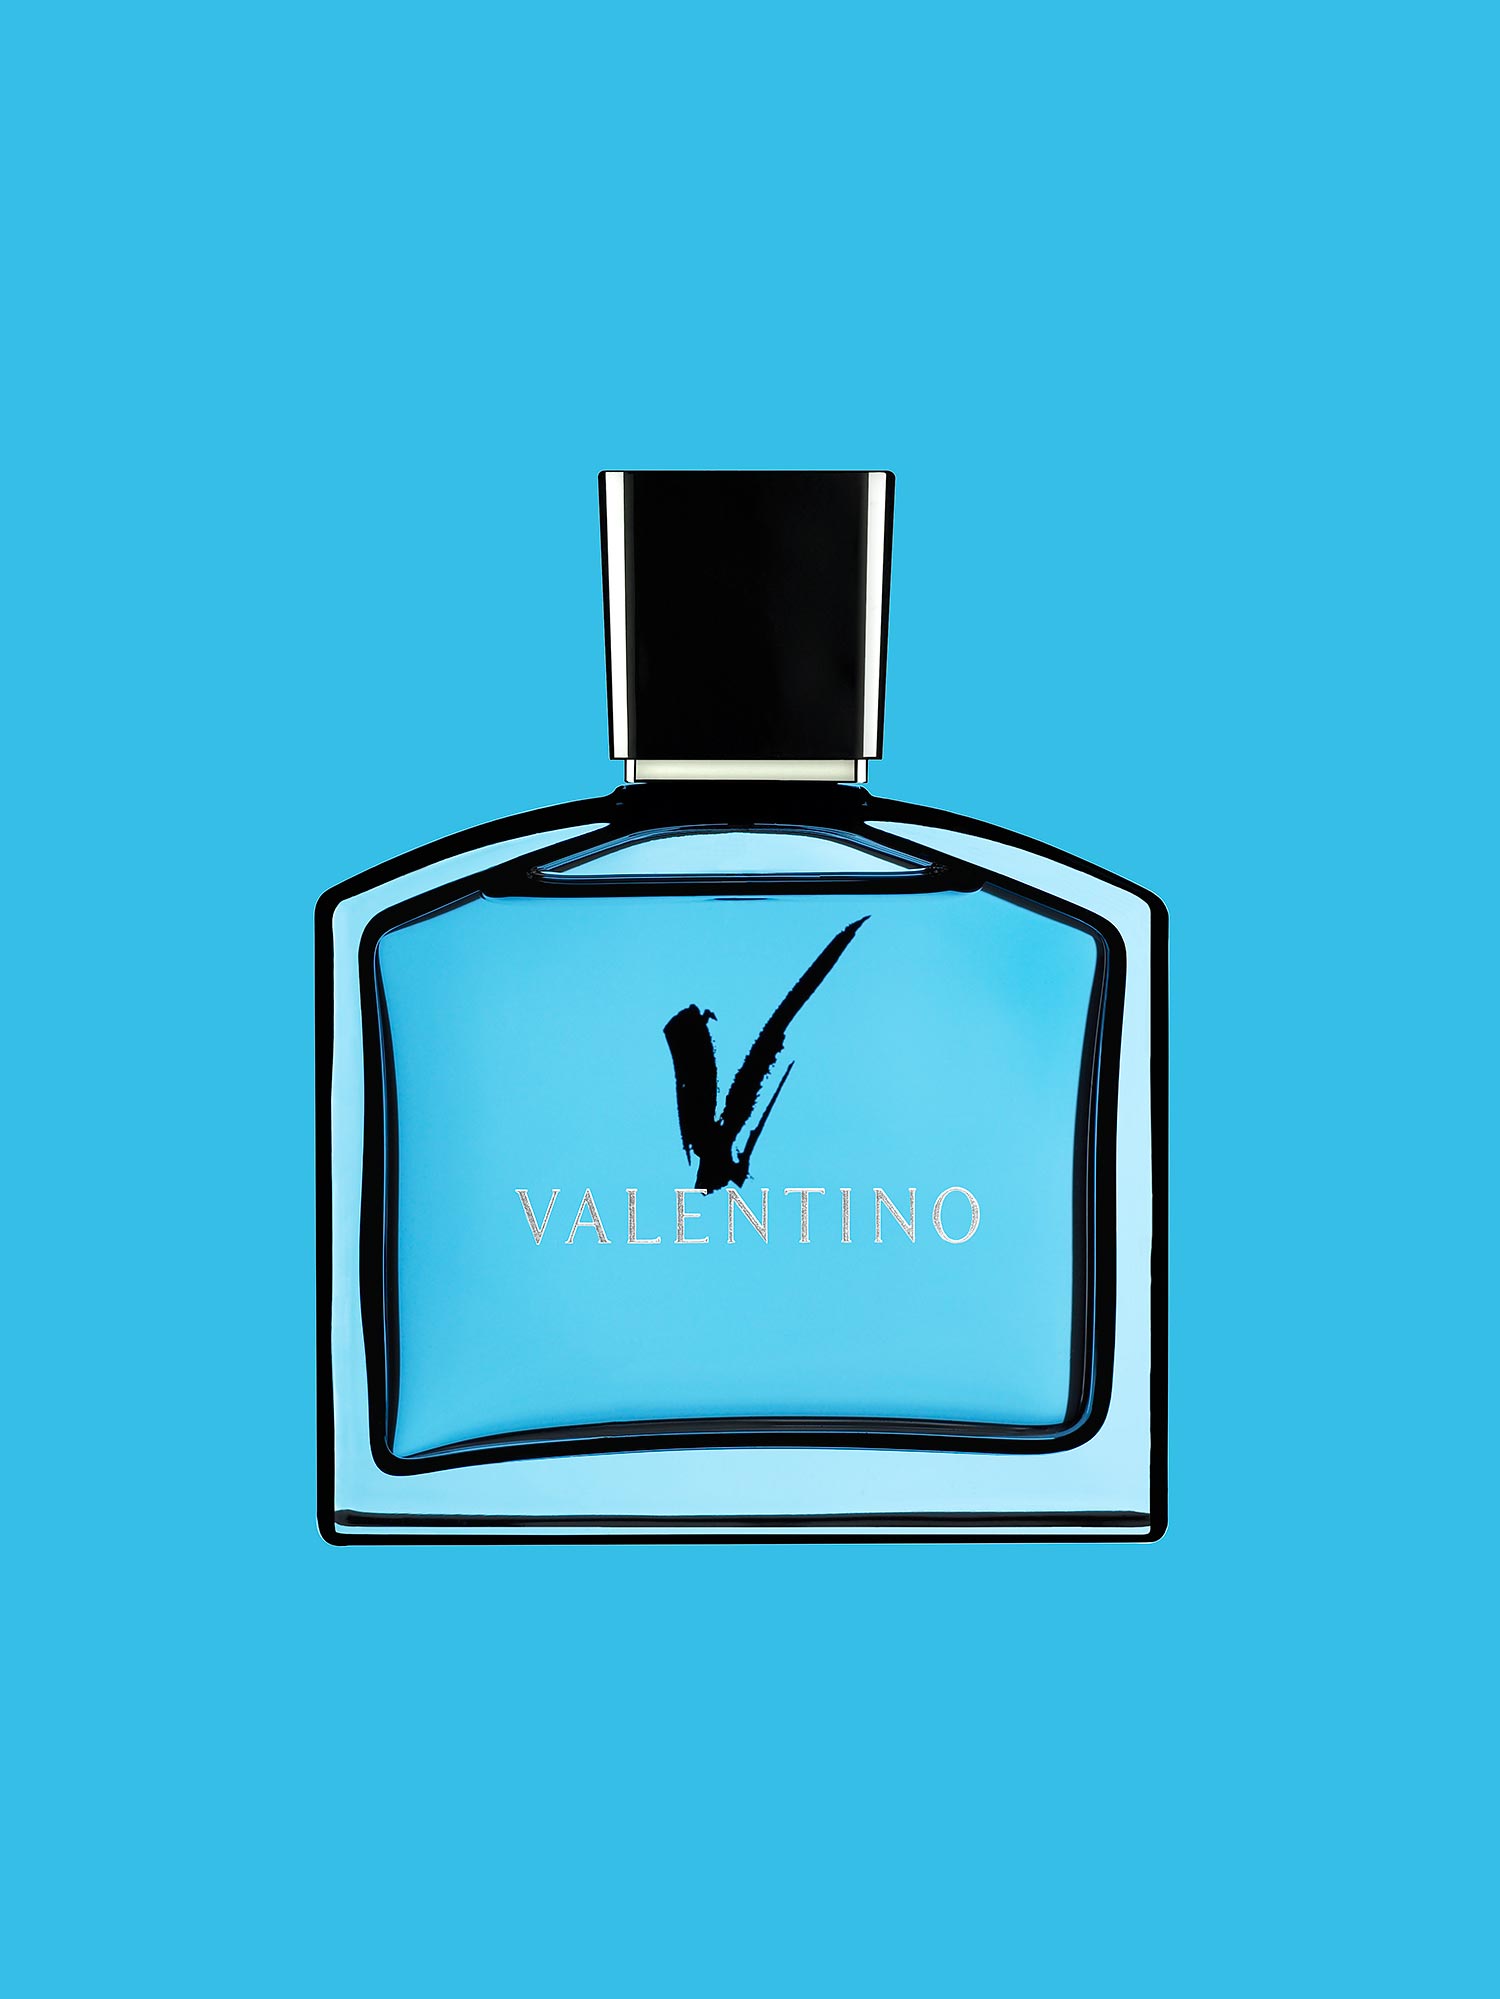 Valentino-web.jpg